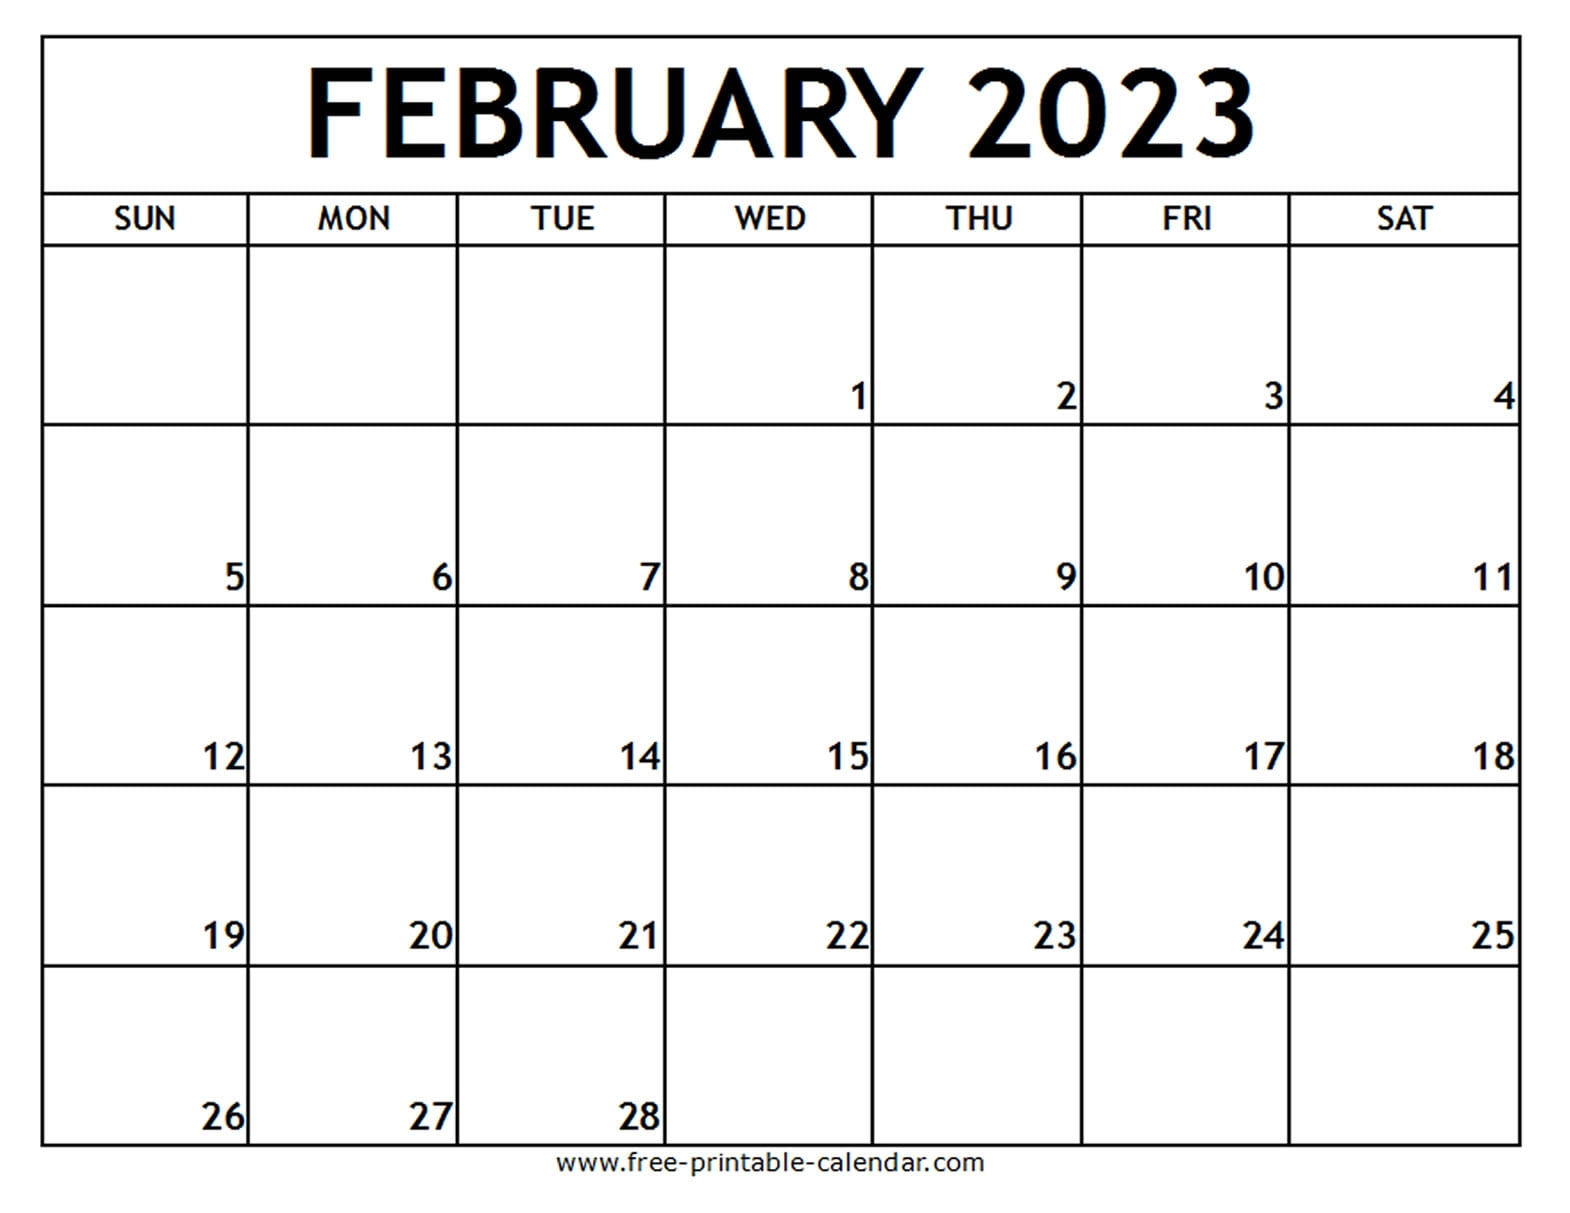 February 2023 Printable Calendar Free printable calendar